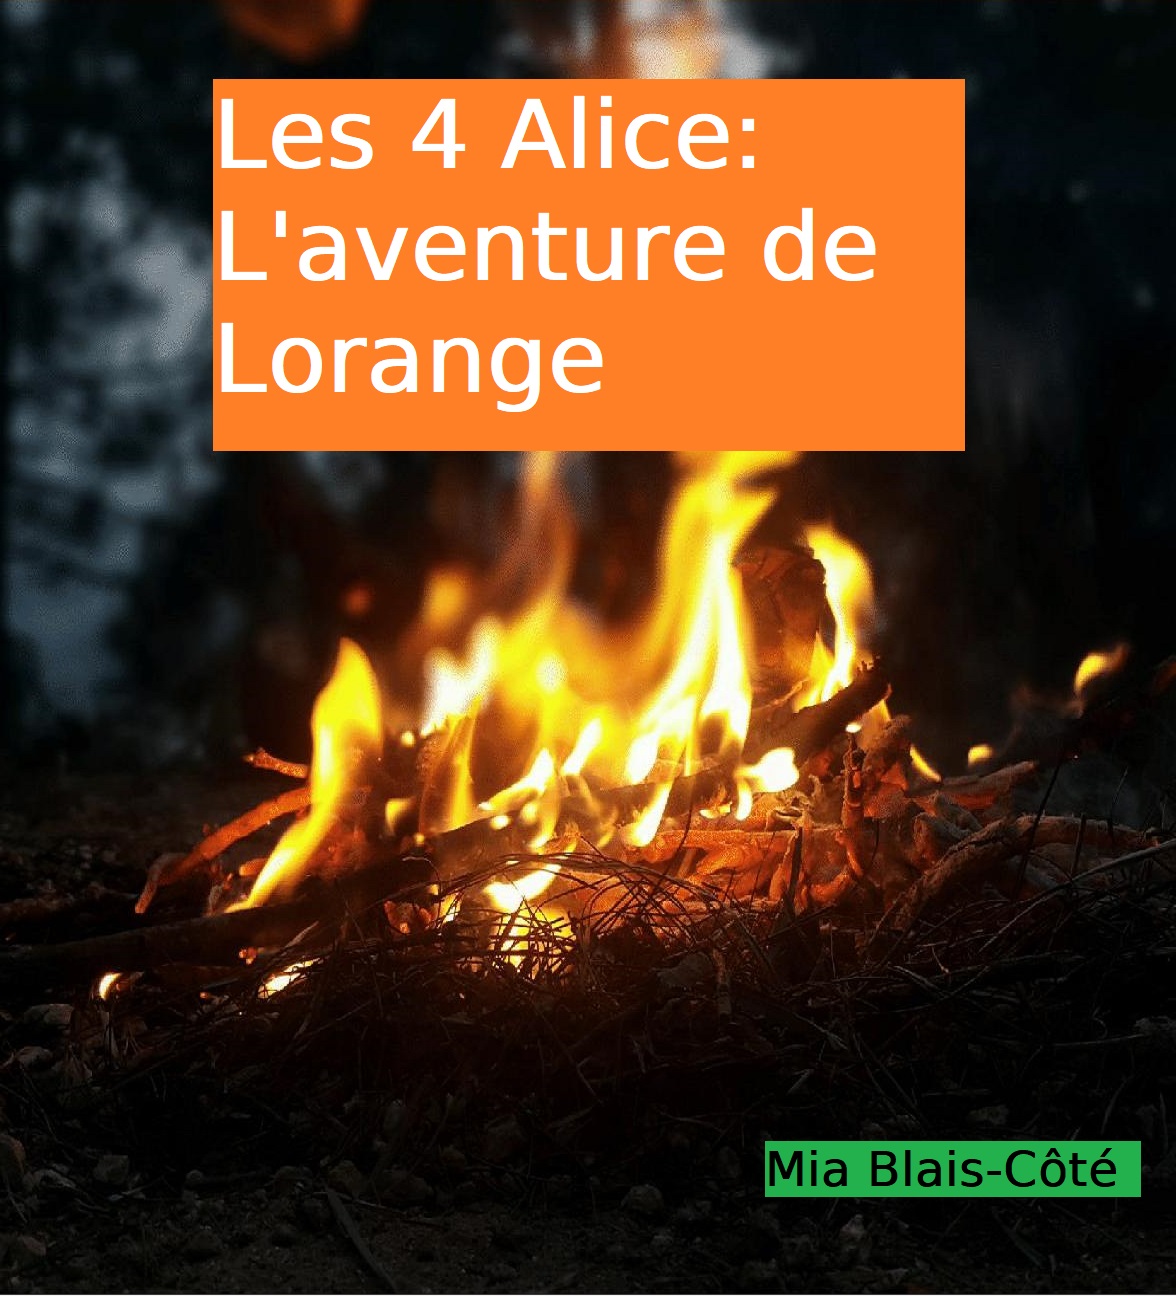 Les 4 Alice: Lorange Journey (Ebook) screenshot